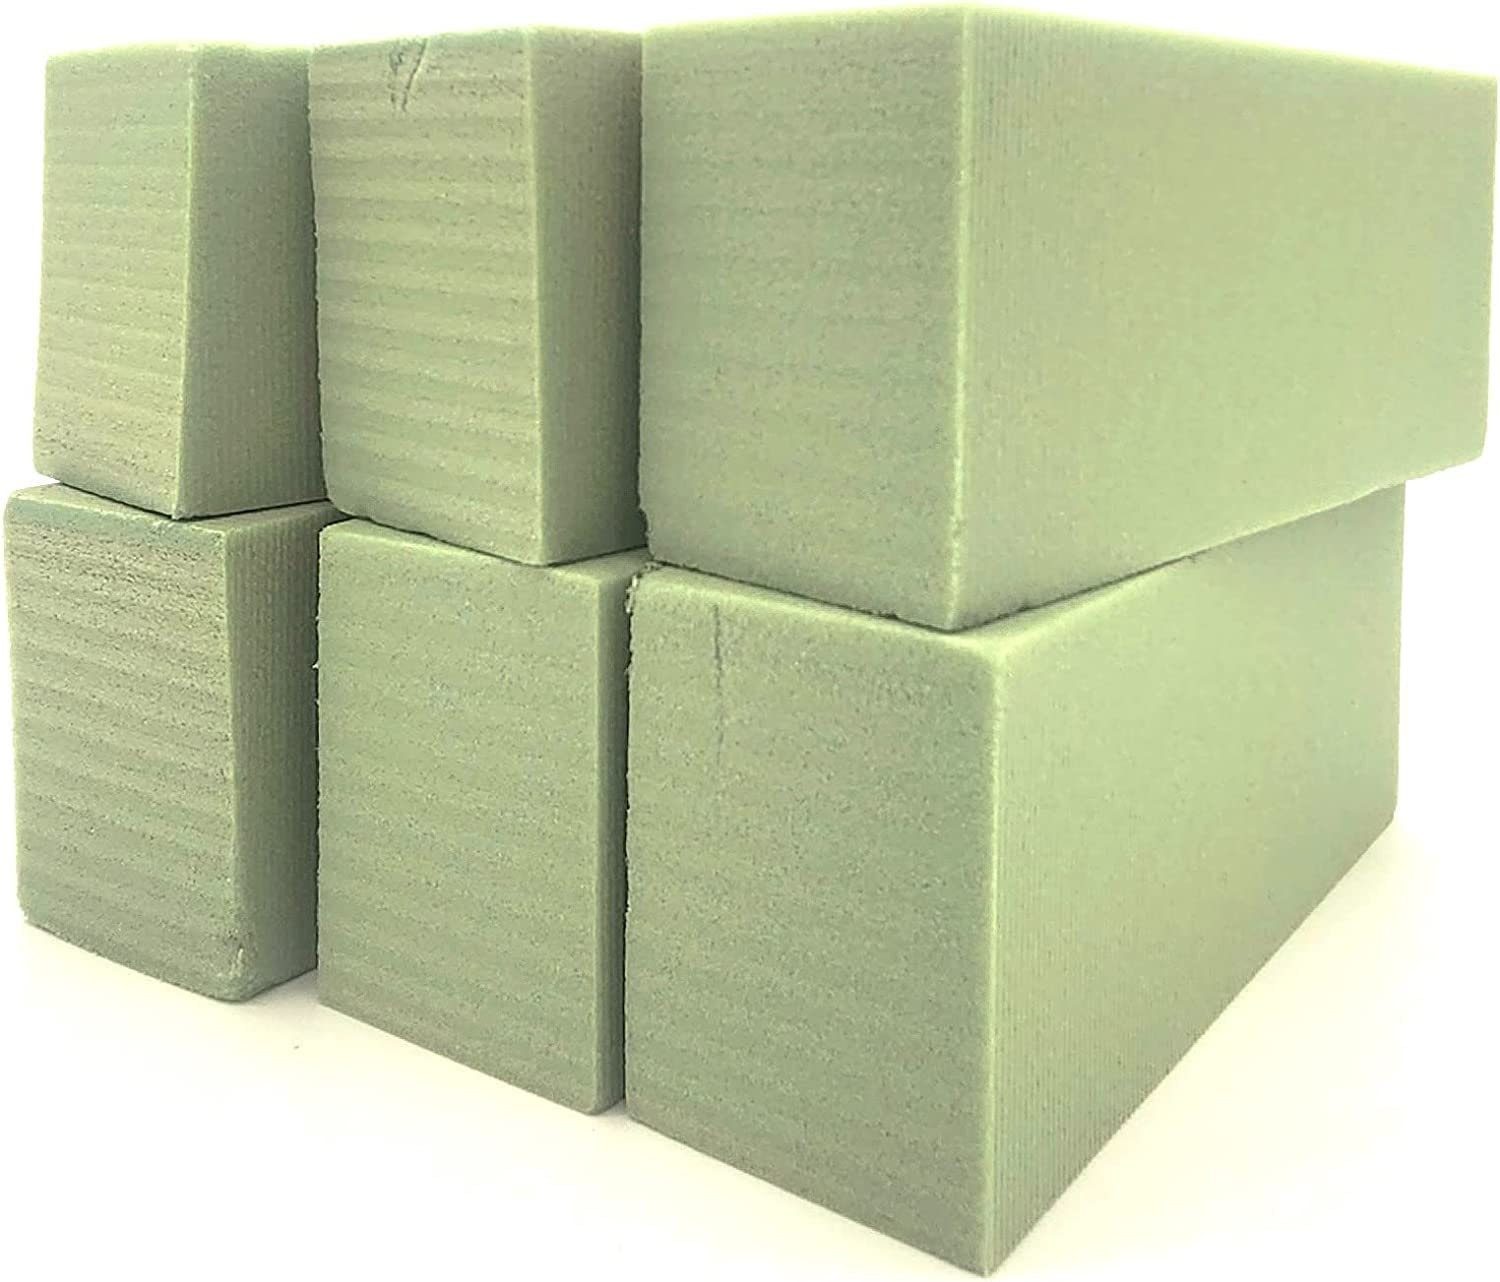 Dry Floral Foam Blocks (6 Bricks) - Dry Foam for Artificial